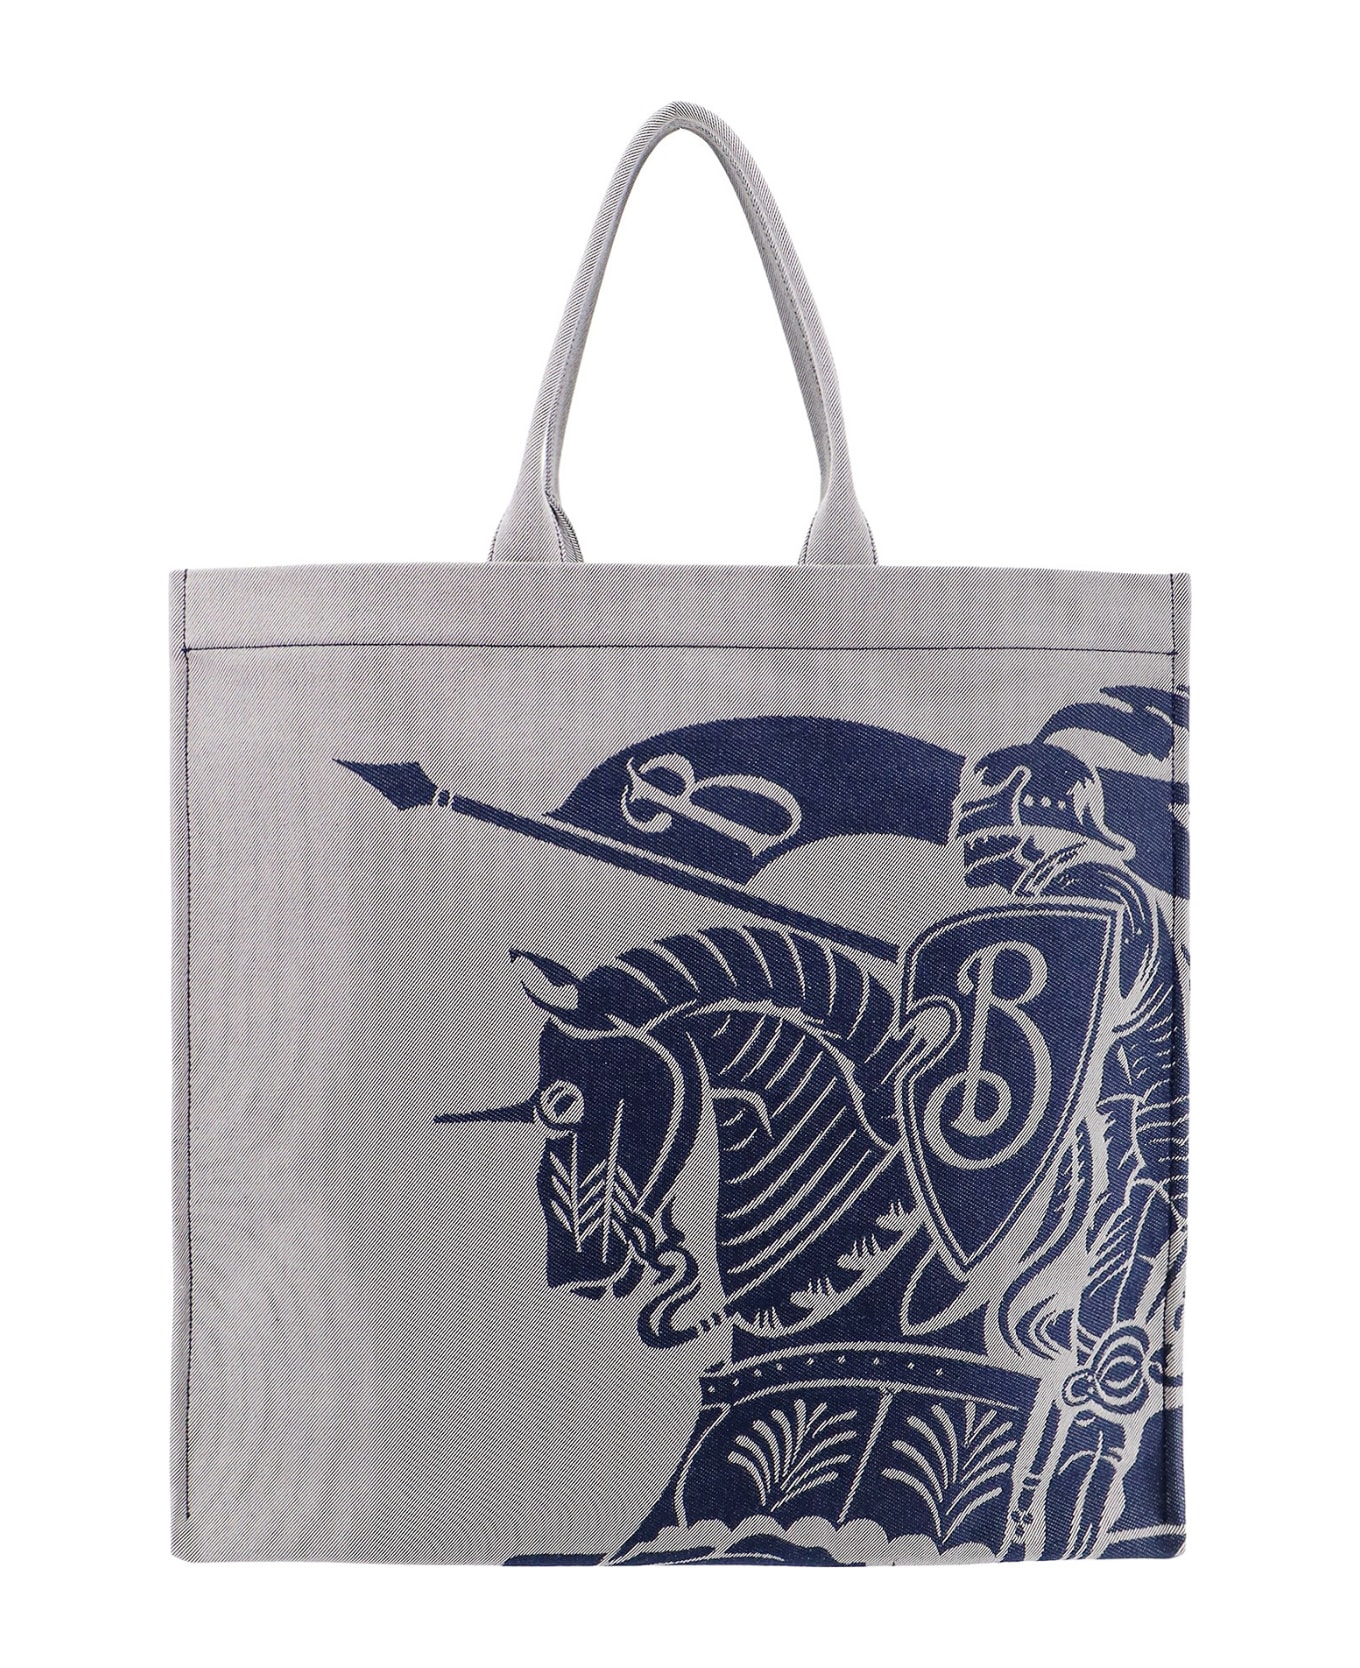 Burberry 'ekd' Xl Shopping Bag - Blue ショルダーバッグ